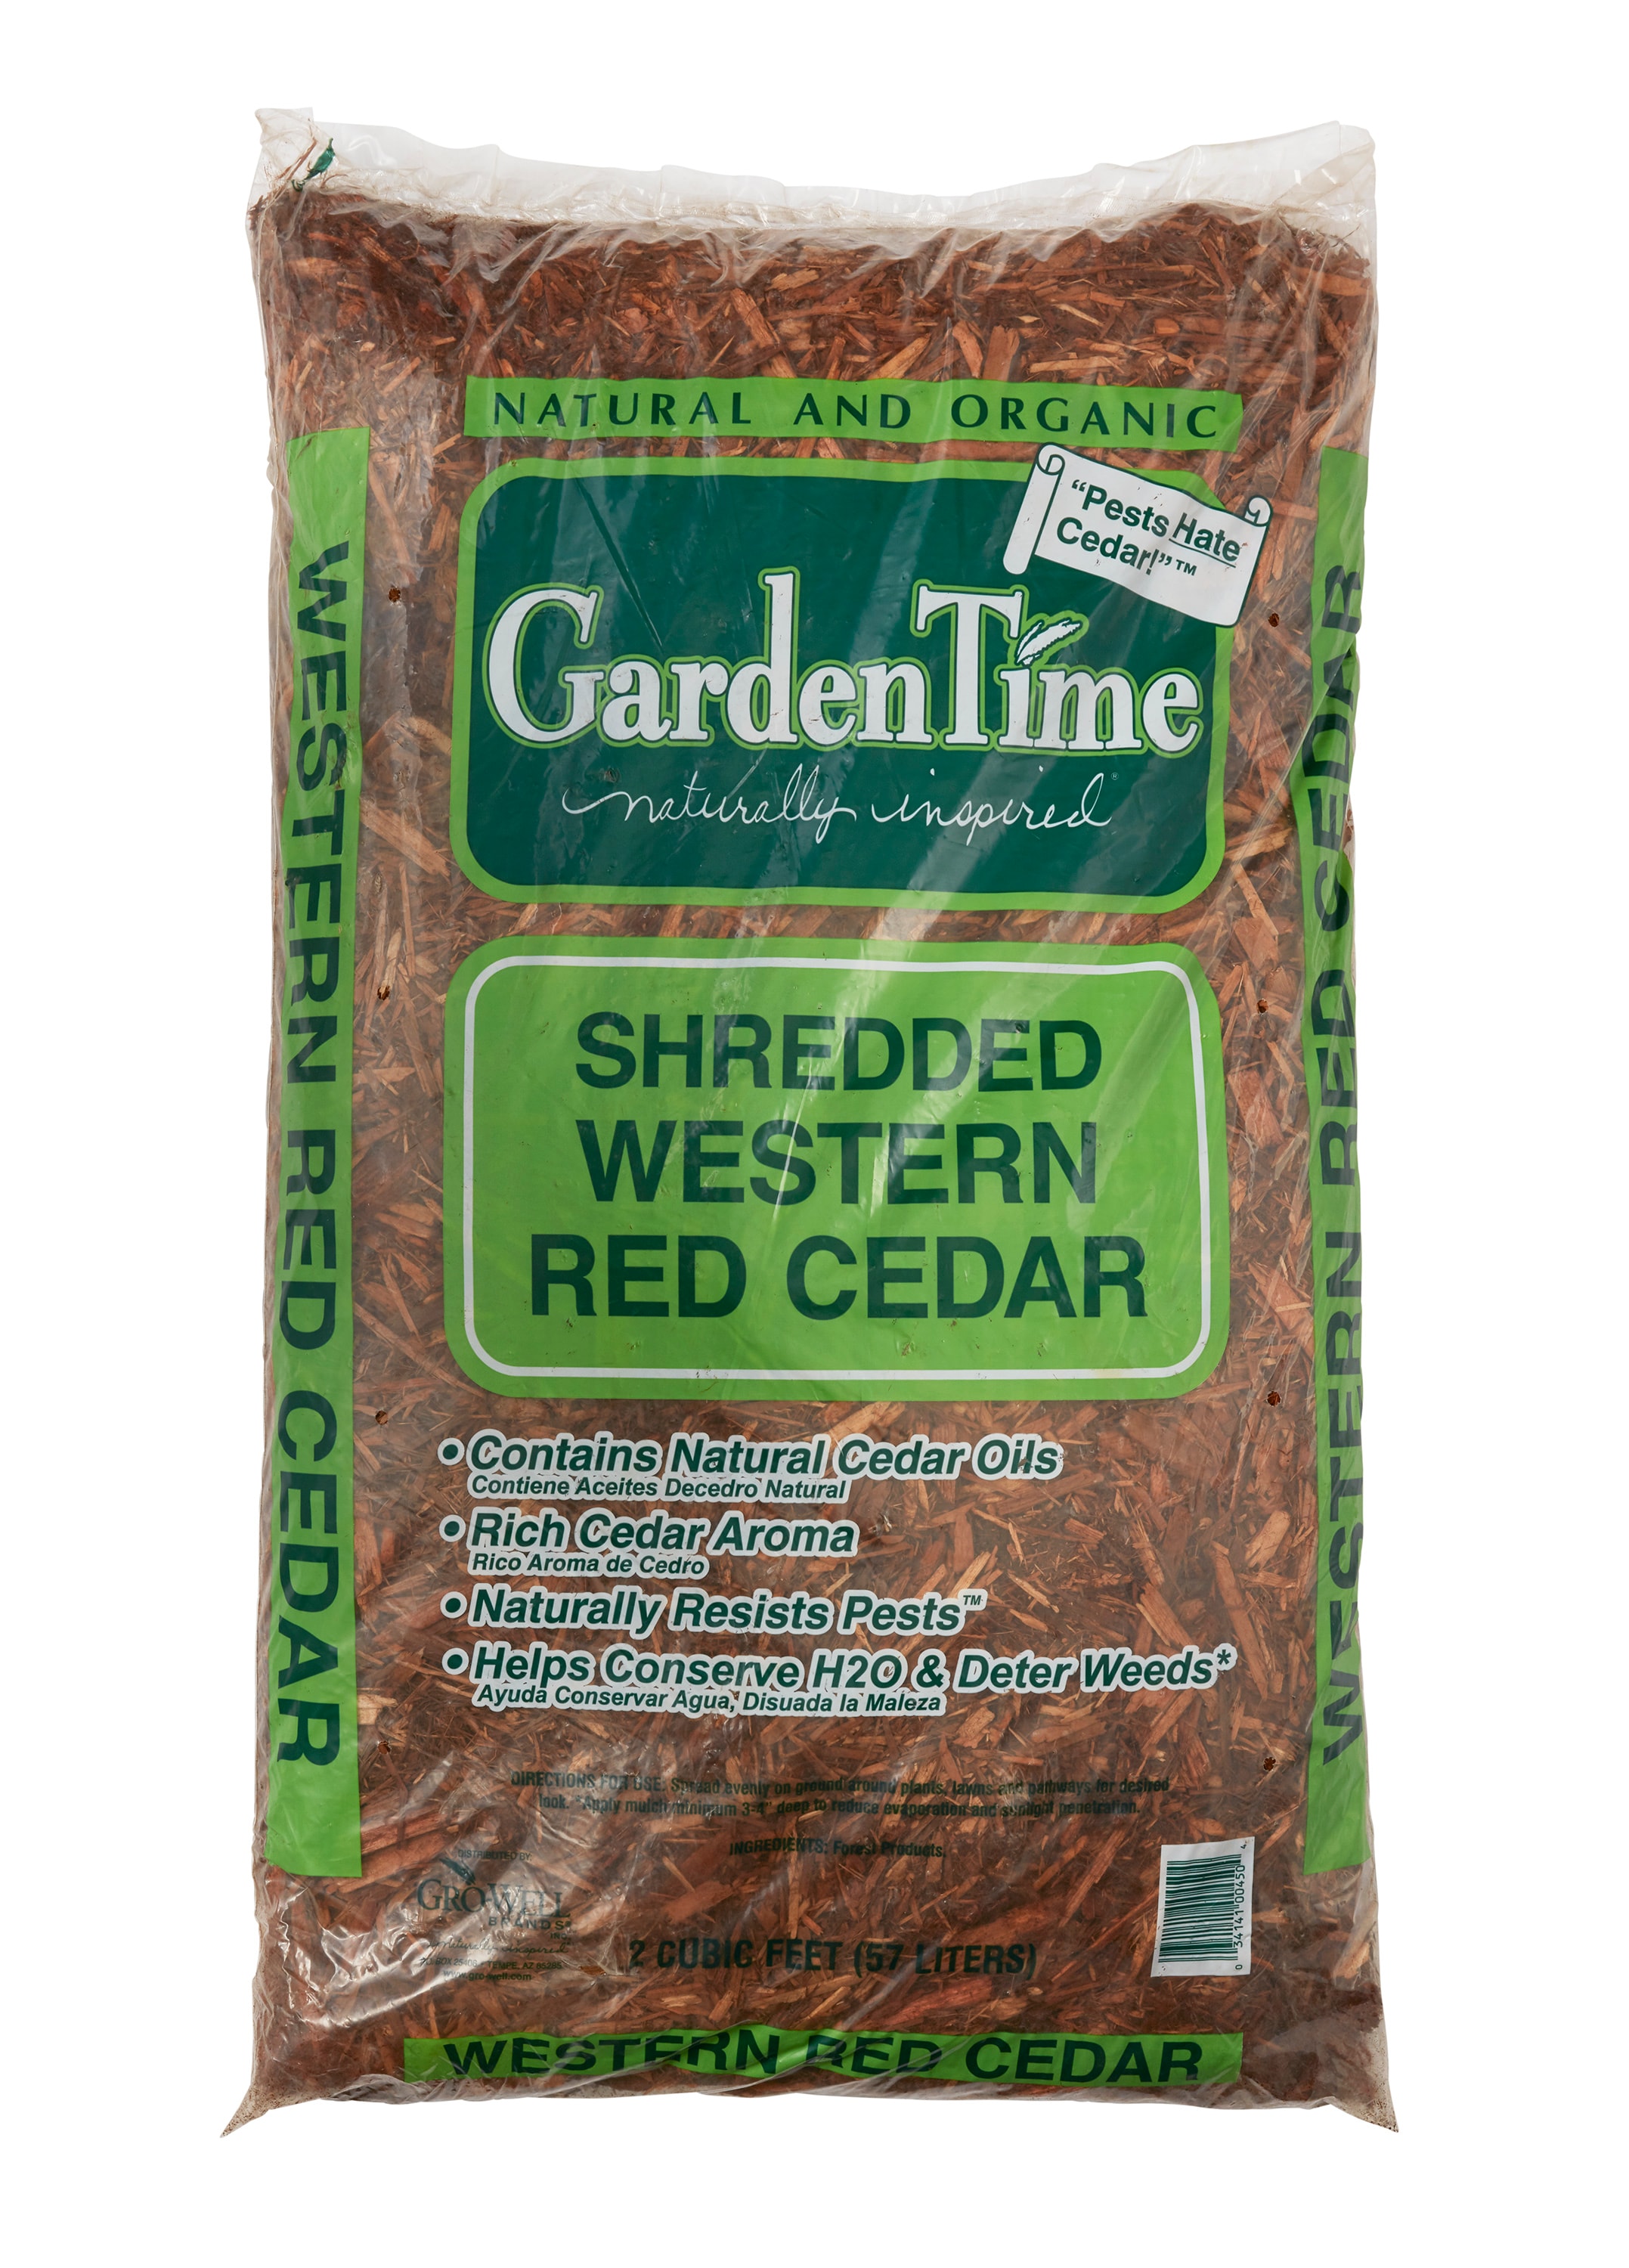 Red Western red cedar Bagged Mulch at